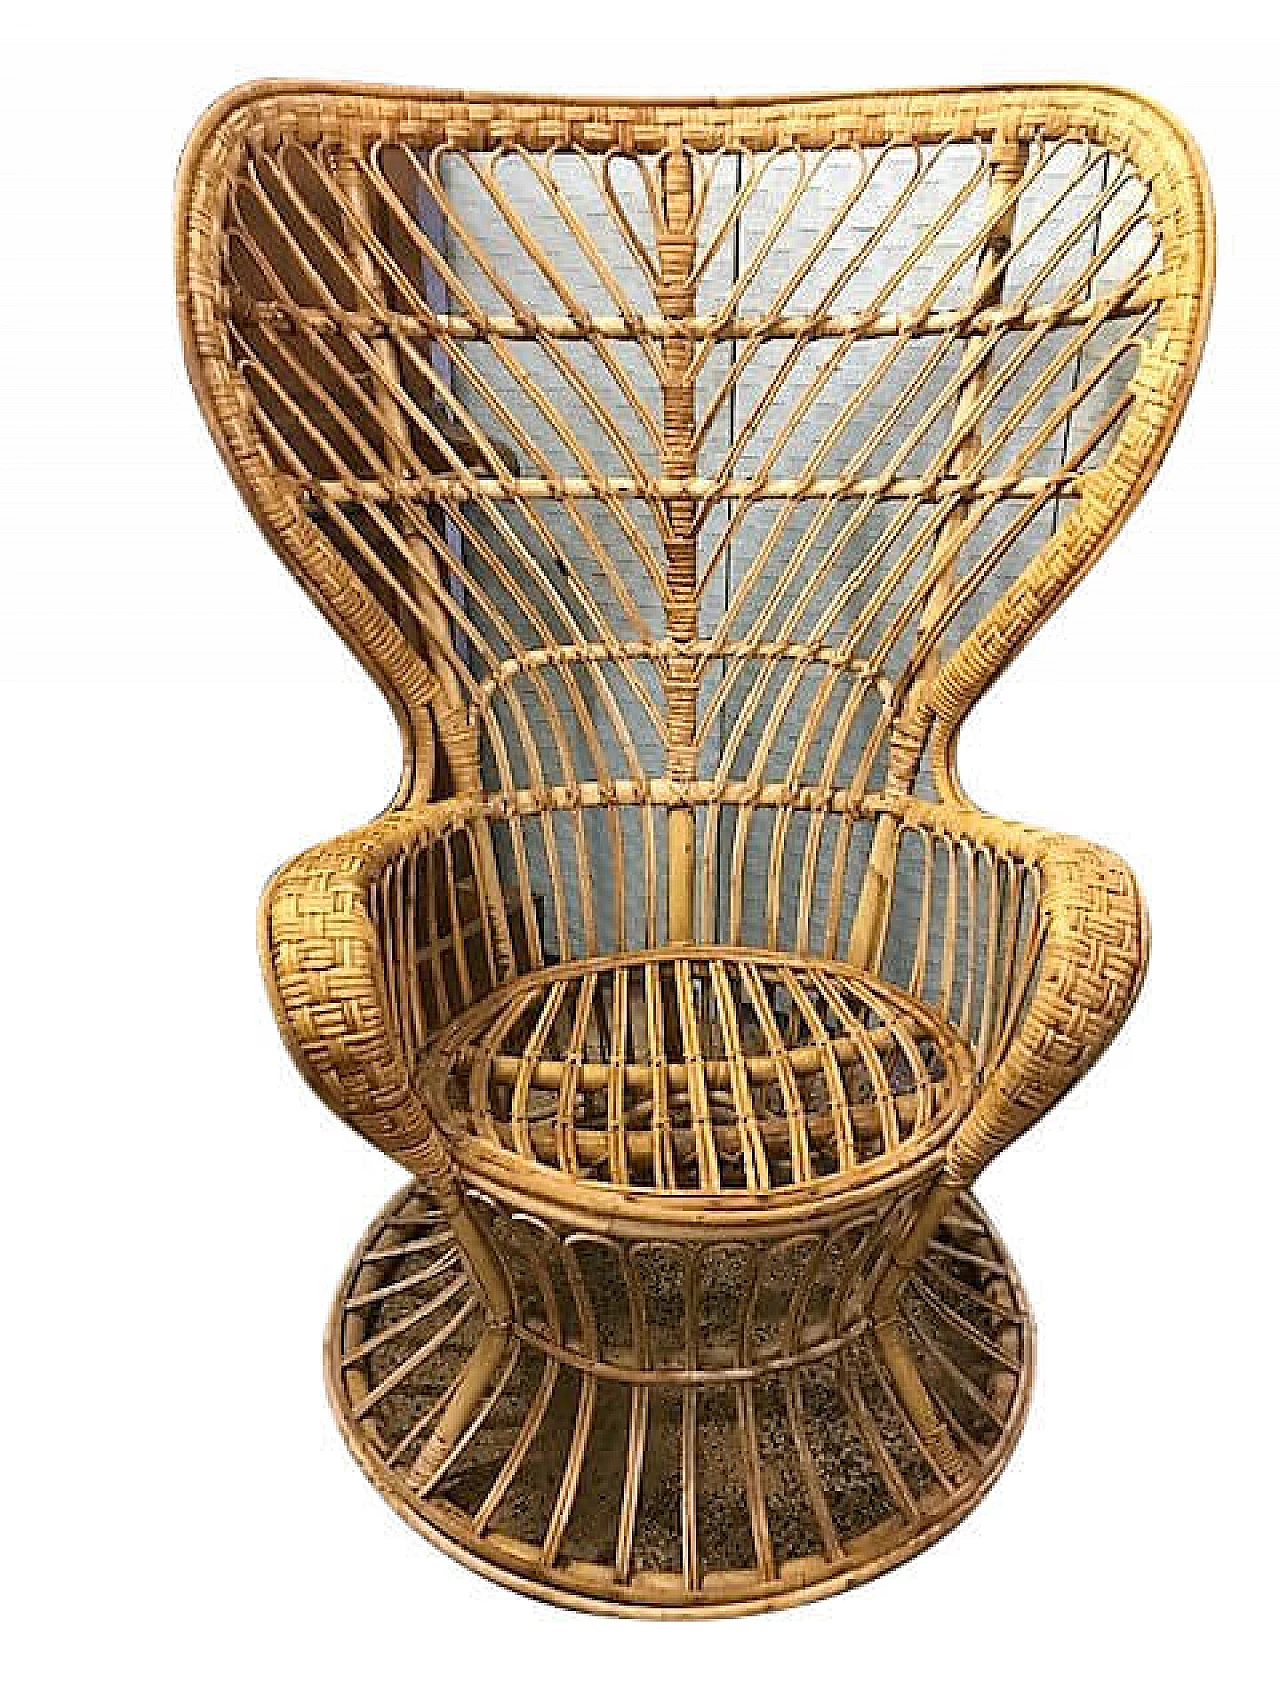 Biancamano armchair by Ponti and Carminati for Bonacina, 1940s 1191447